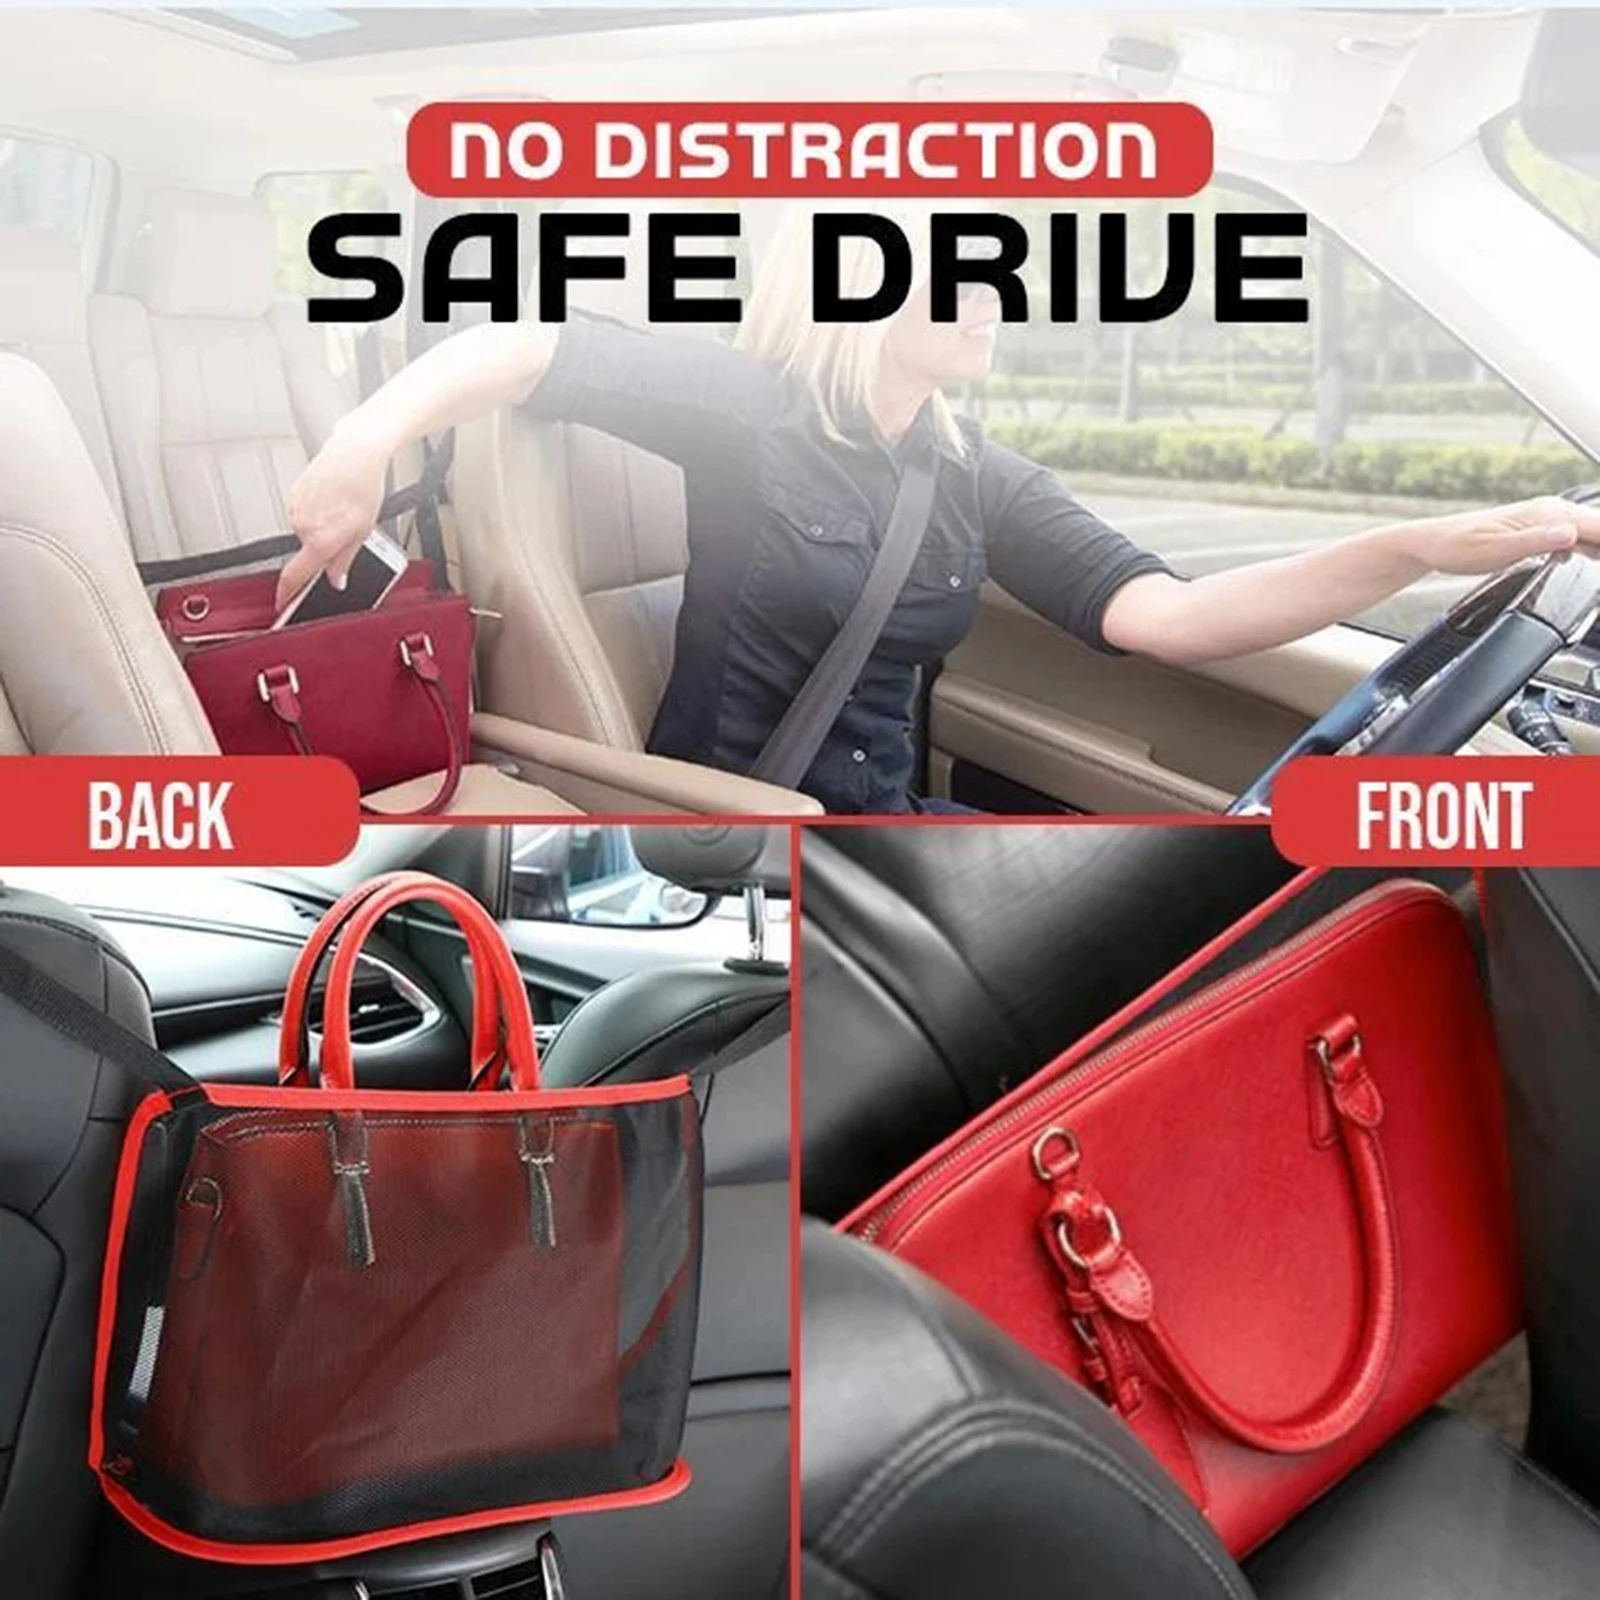 

Car Net Pocket Handbag Holder for Handbag Bag Documents Phone Valuable Items ASD88